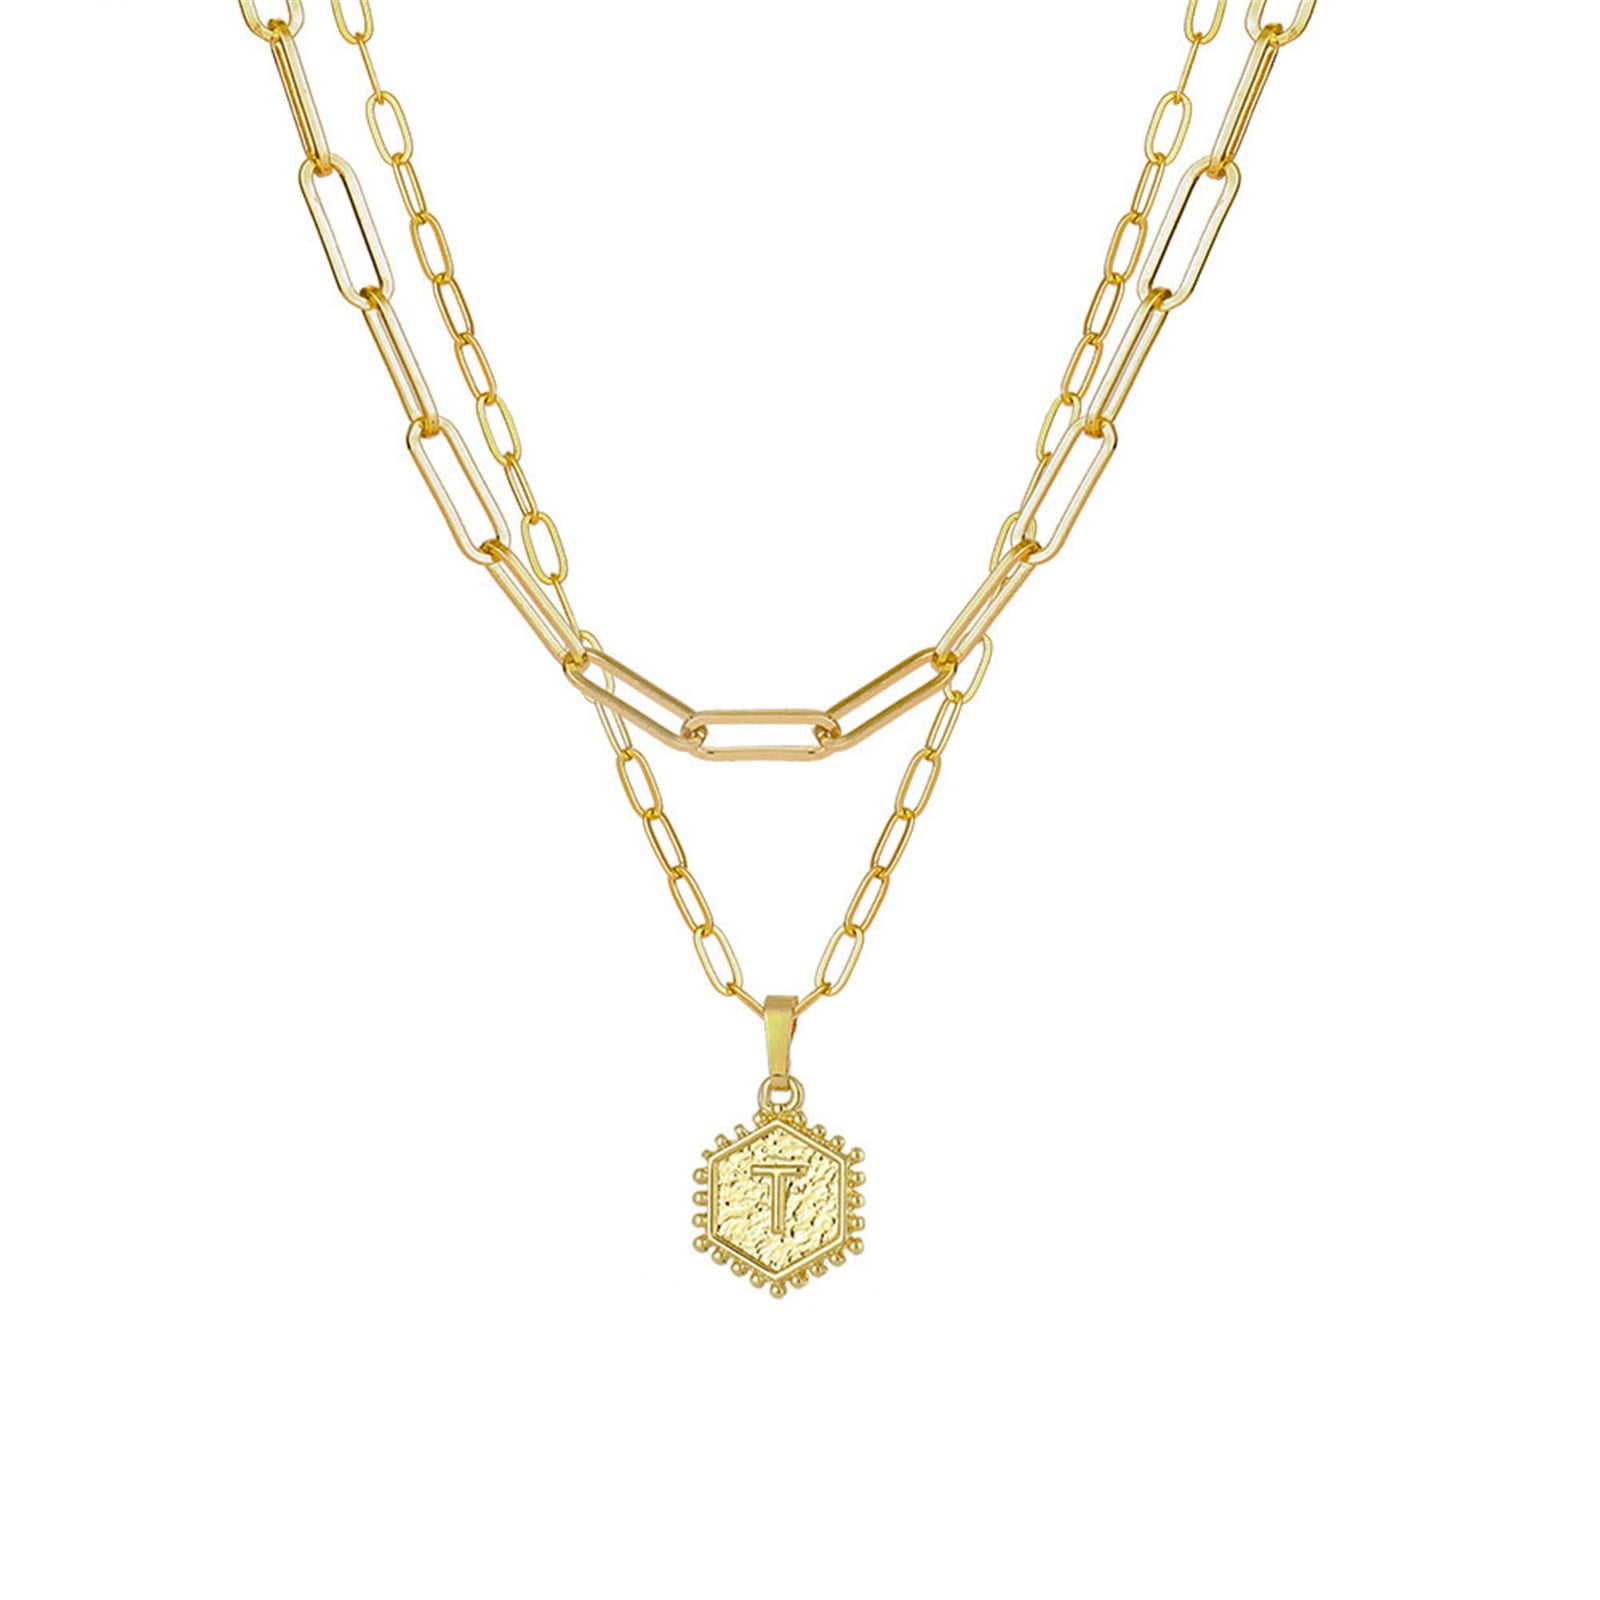 Jikolililili Exquisite Rhinestone Chain Necklace Set Diamond